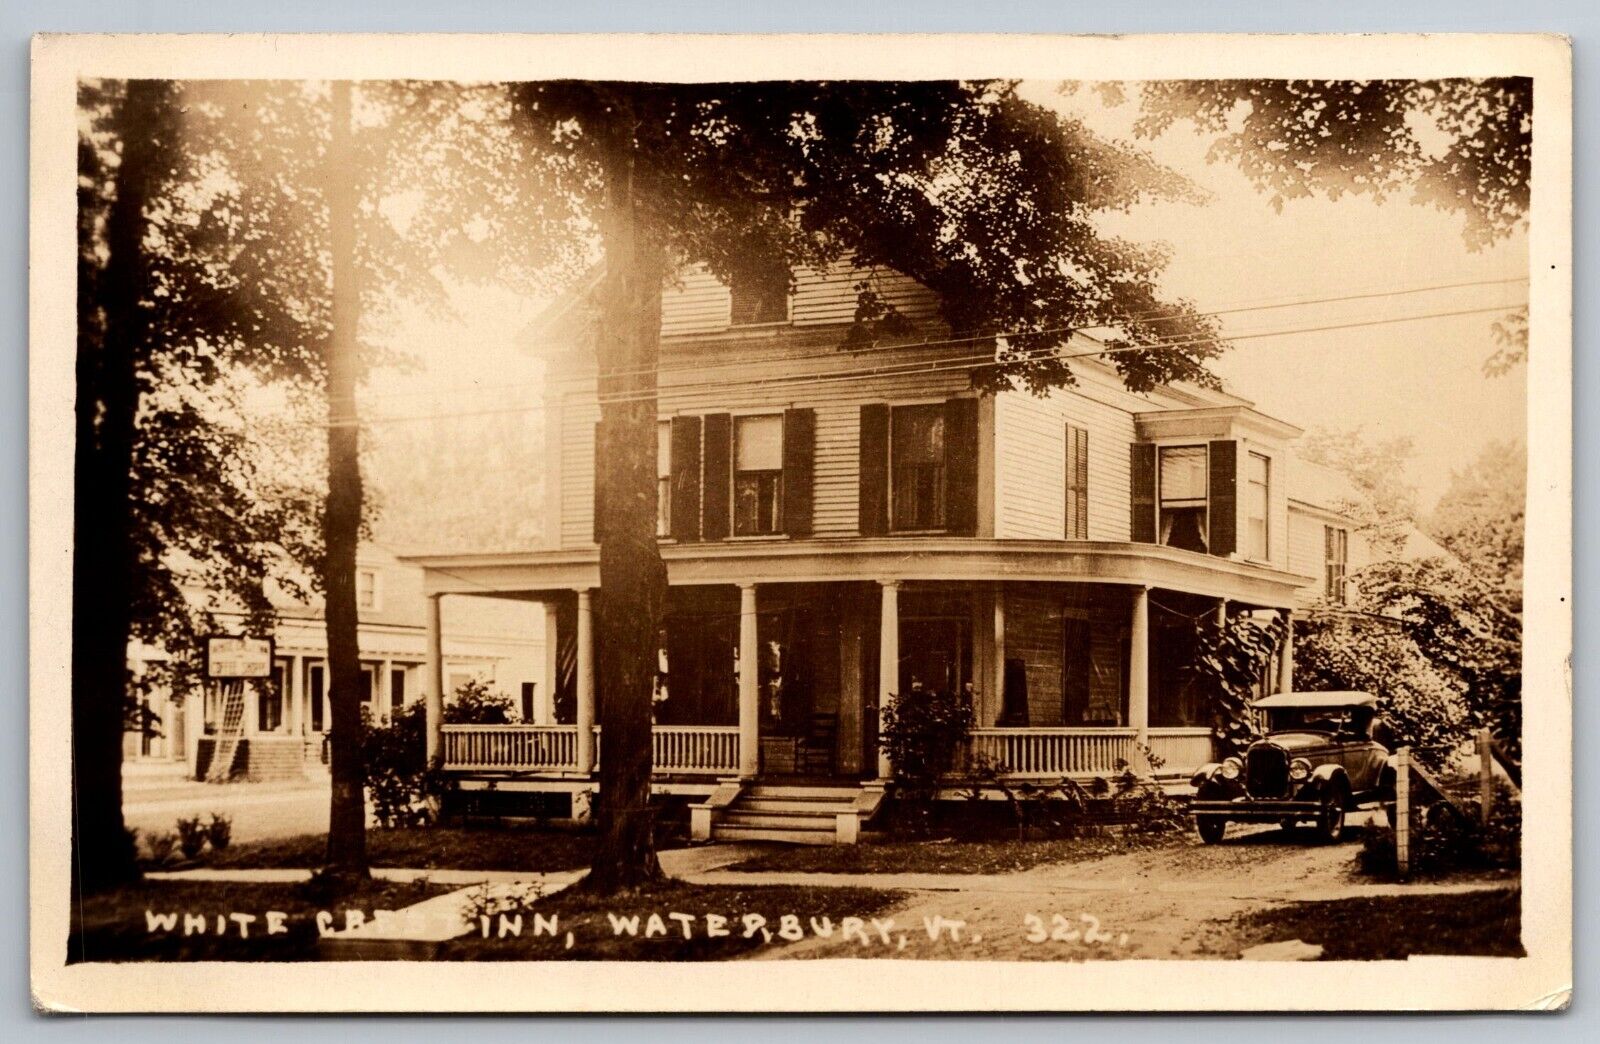 White Crest Inn. Waterbury Vermont Real Photo Postcard. RPPC